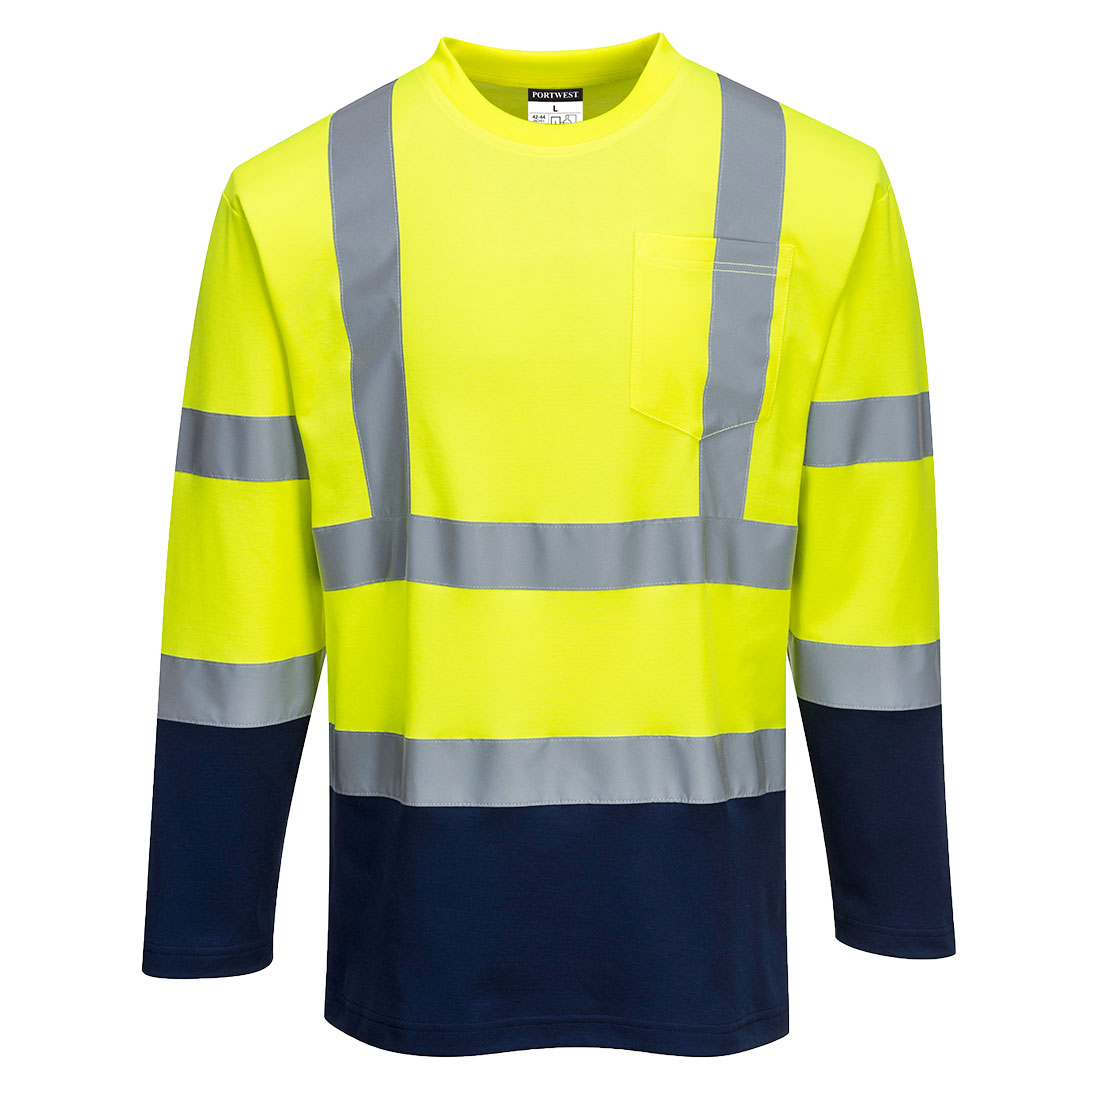 camiseta-manga-larga-bicolor-amarillo-azul-alta-visibilidad-con-cinta-reflectiva-S280-cental-de-suministrosgs.jpg